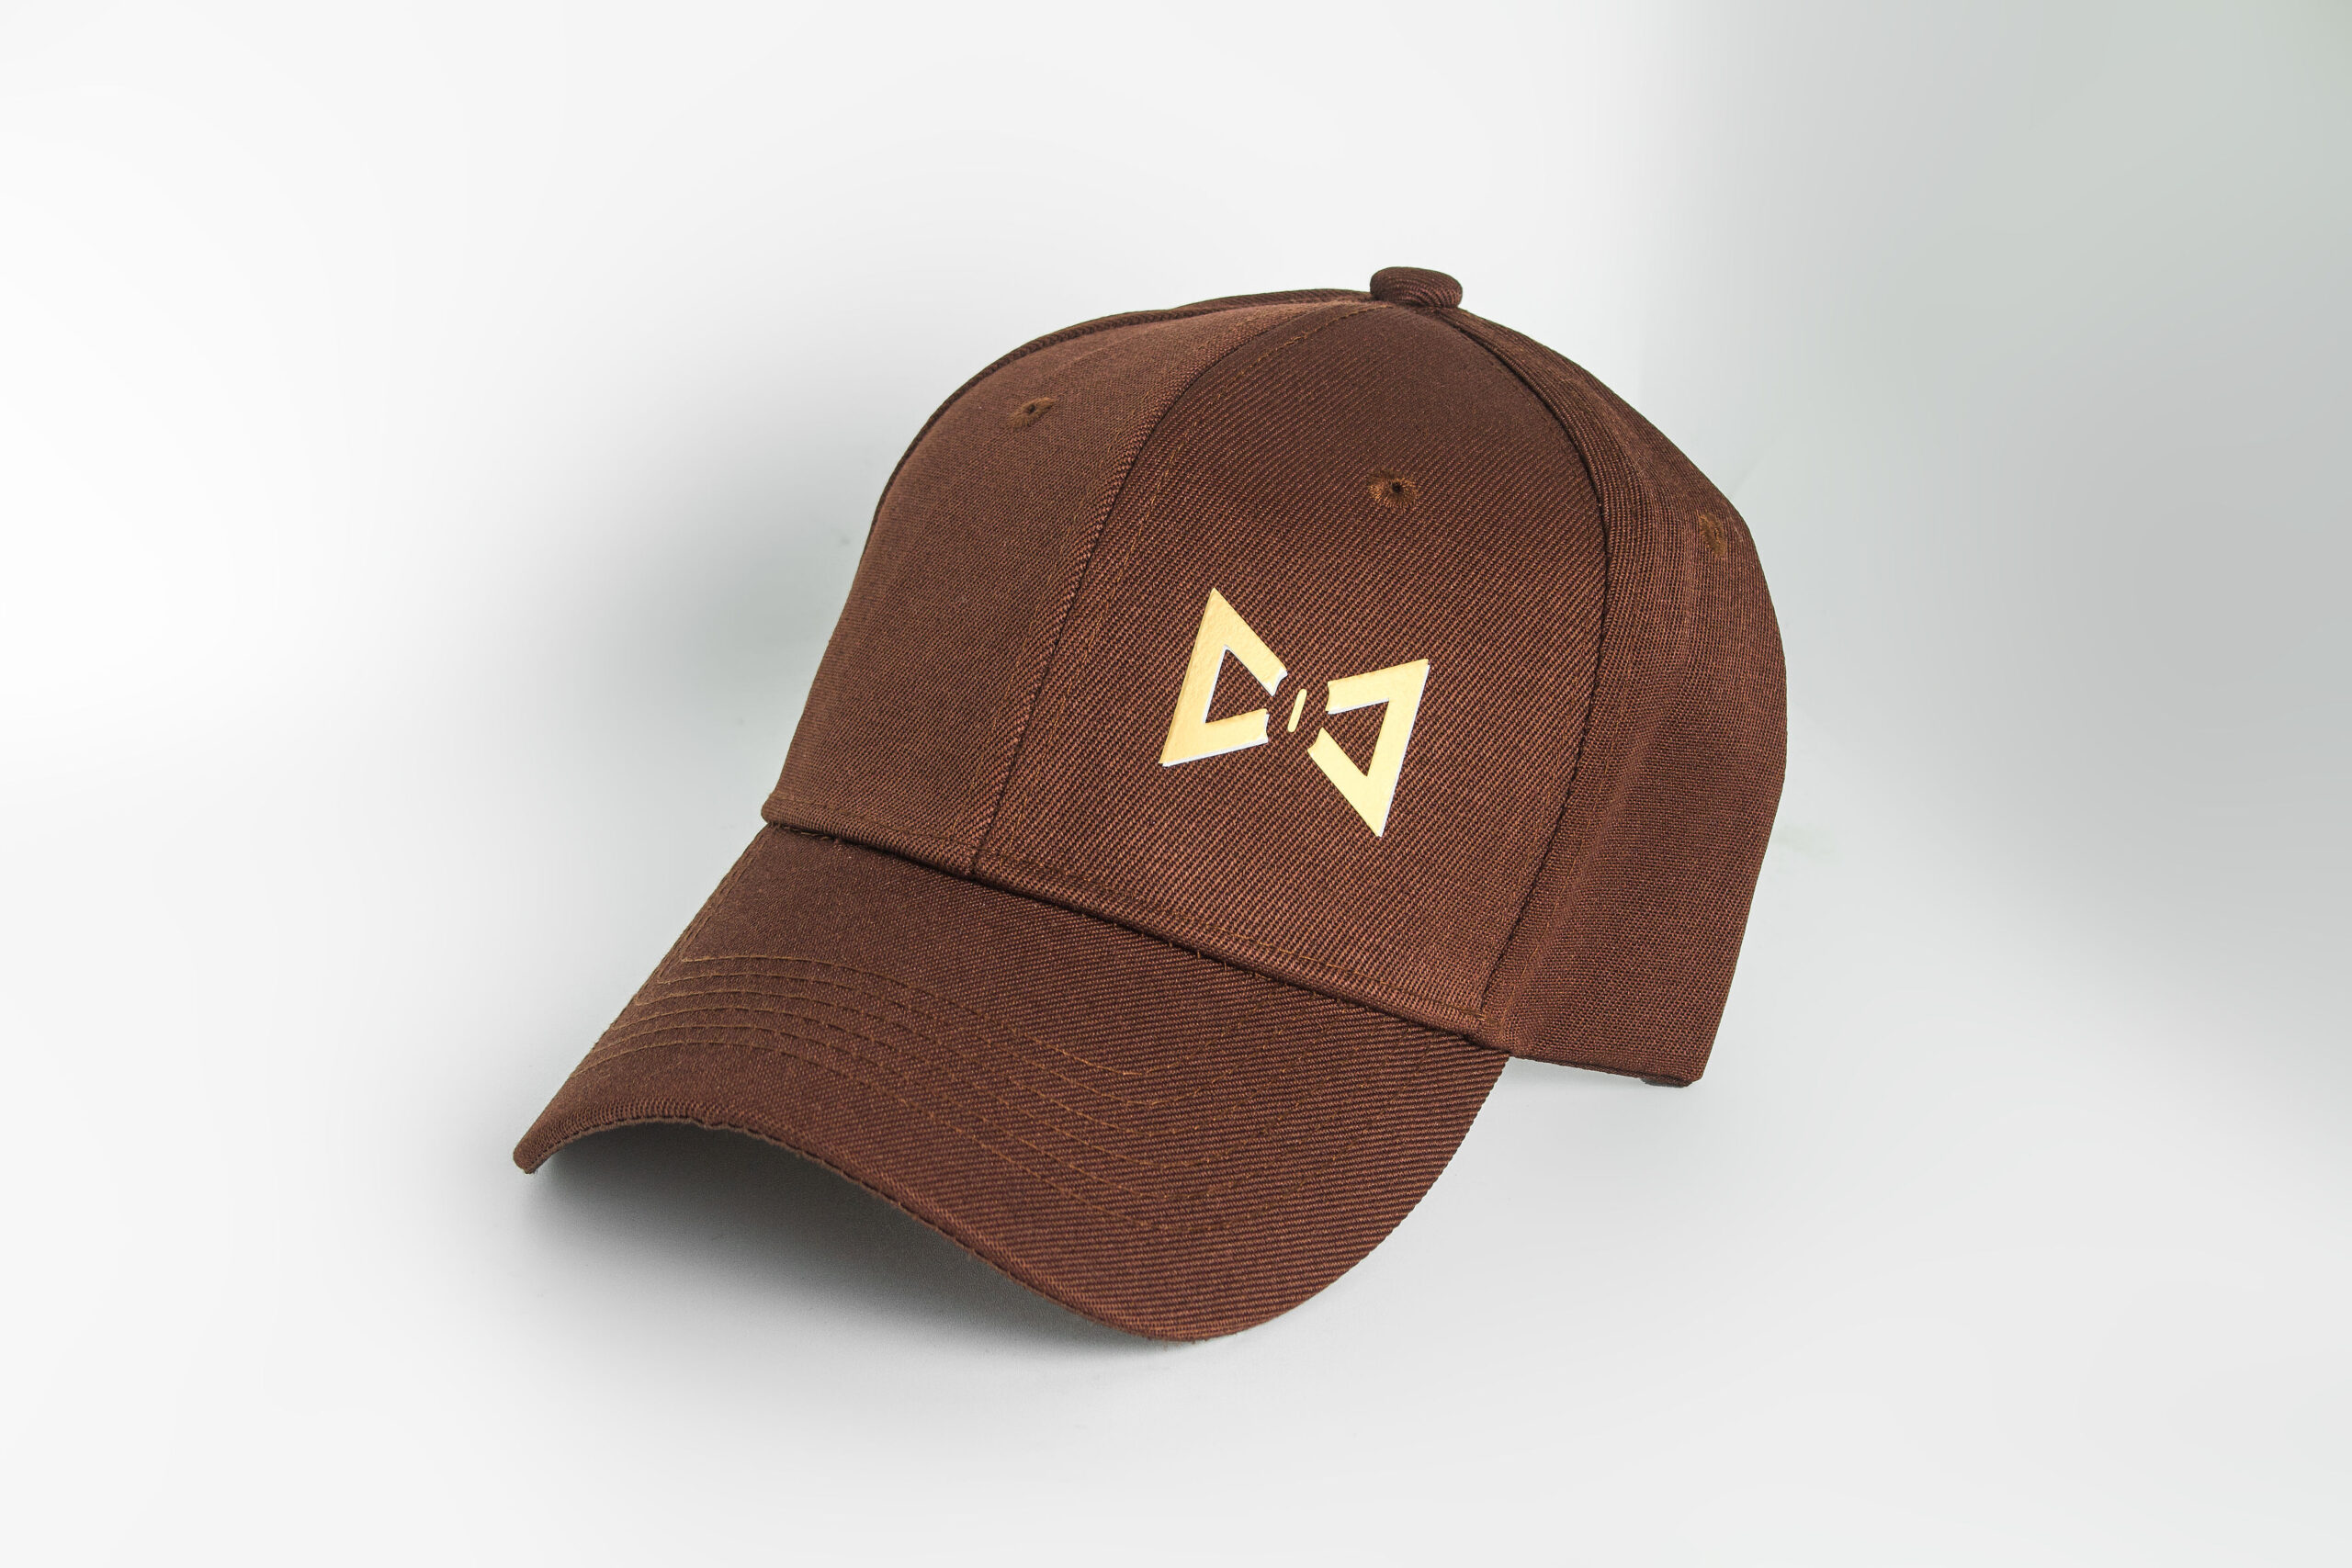 The-indulgence-brown-baseball-cap